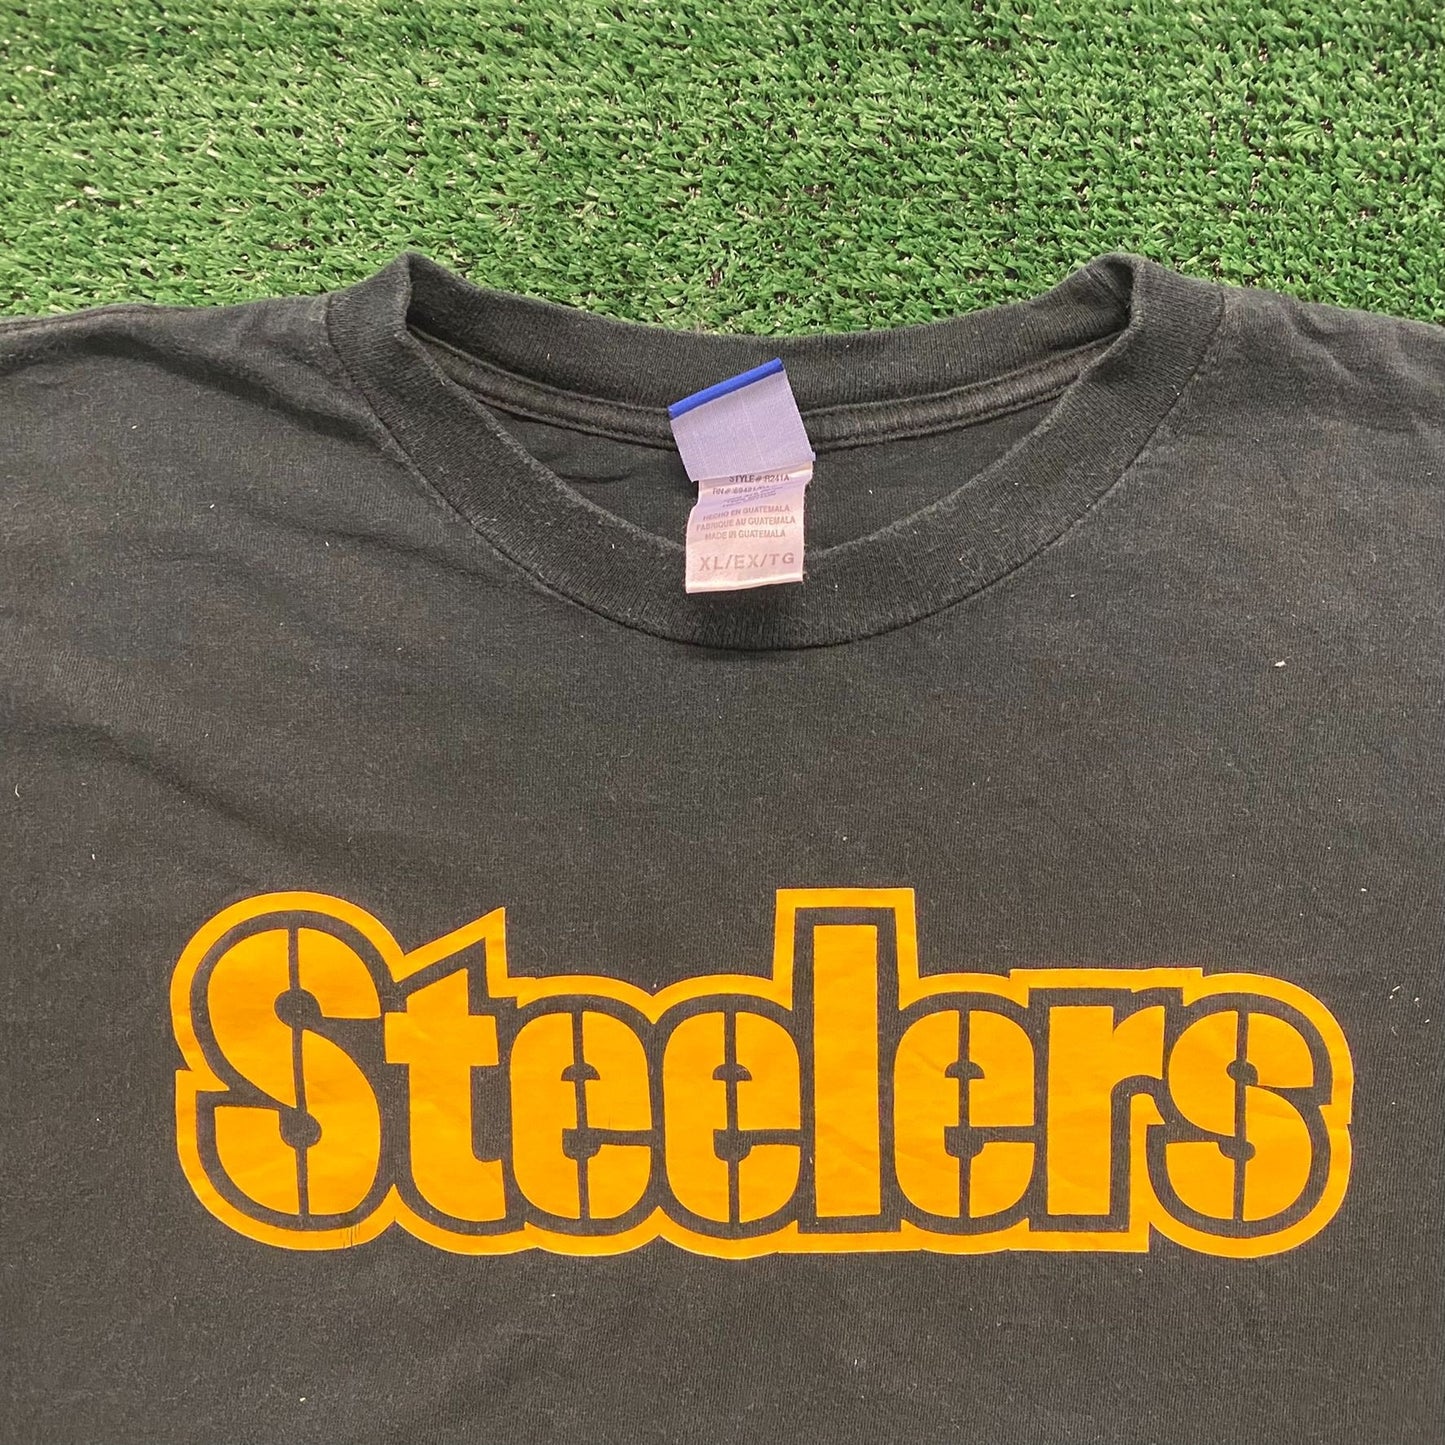 Pittsburgh Steelers Vintage NFL Football T-Shirt